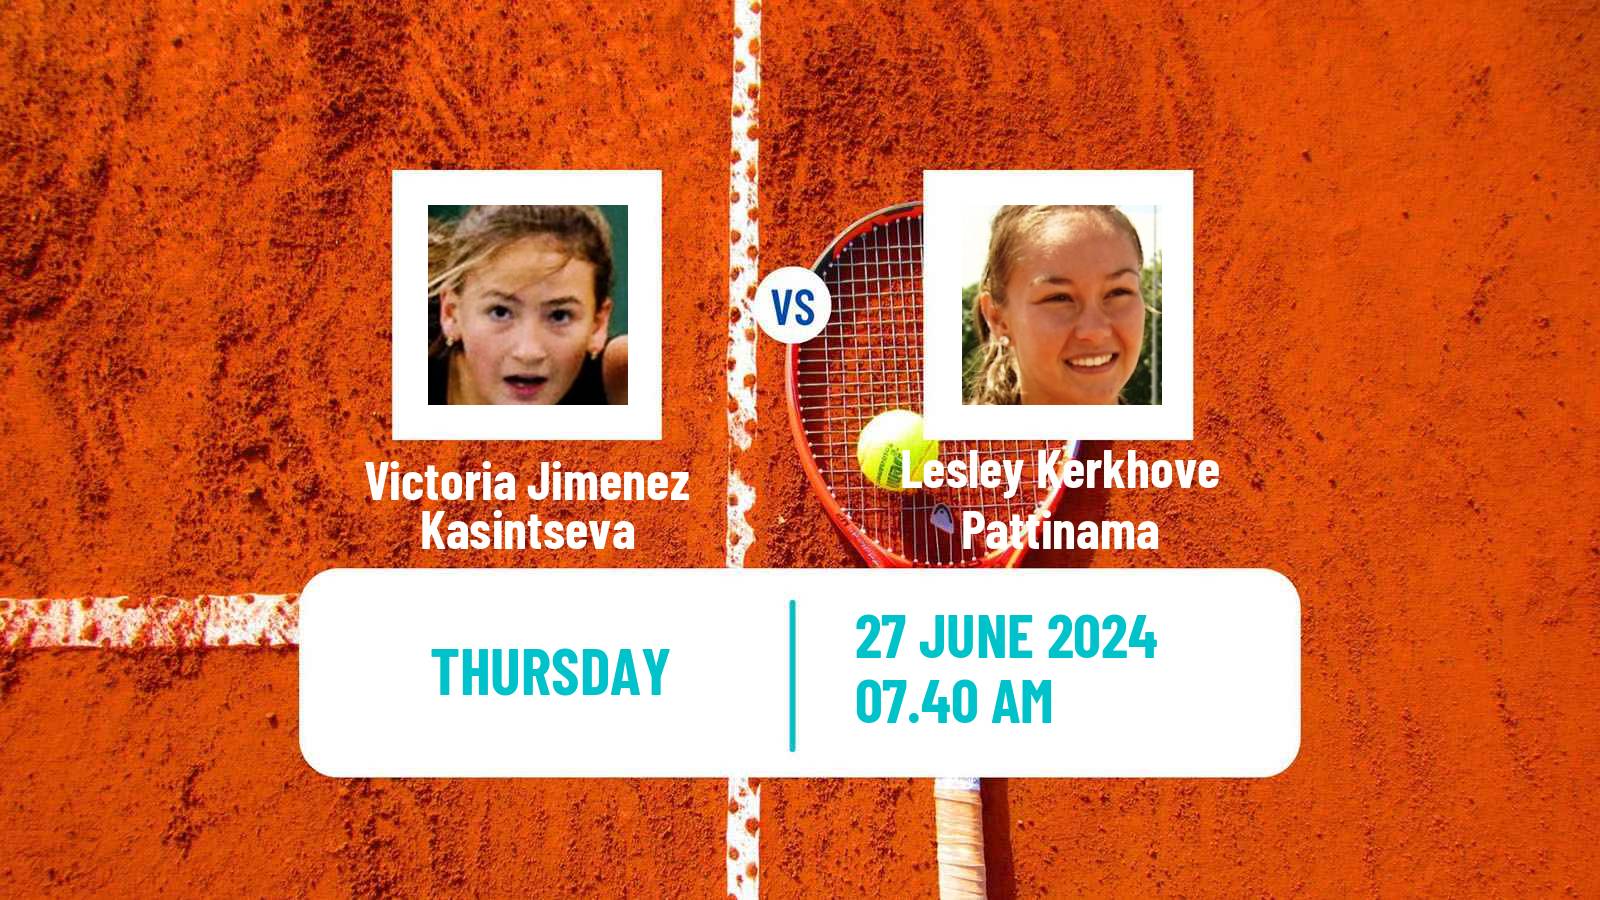 Tennis ITF W75 Doksy Stare Splavy Women Victoria Jimenez Kasintseva - Lesley Kerkhove Pattinama